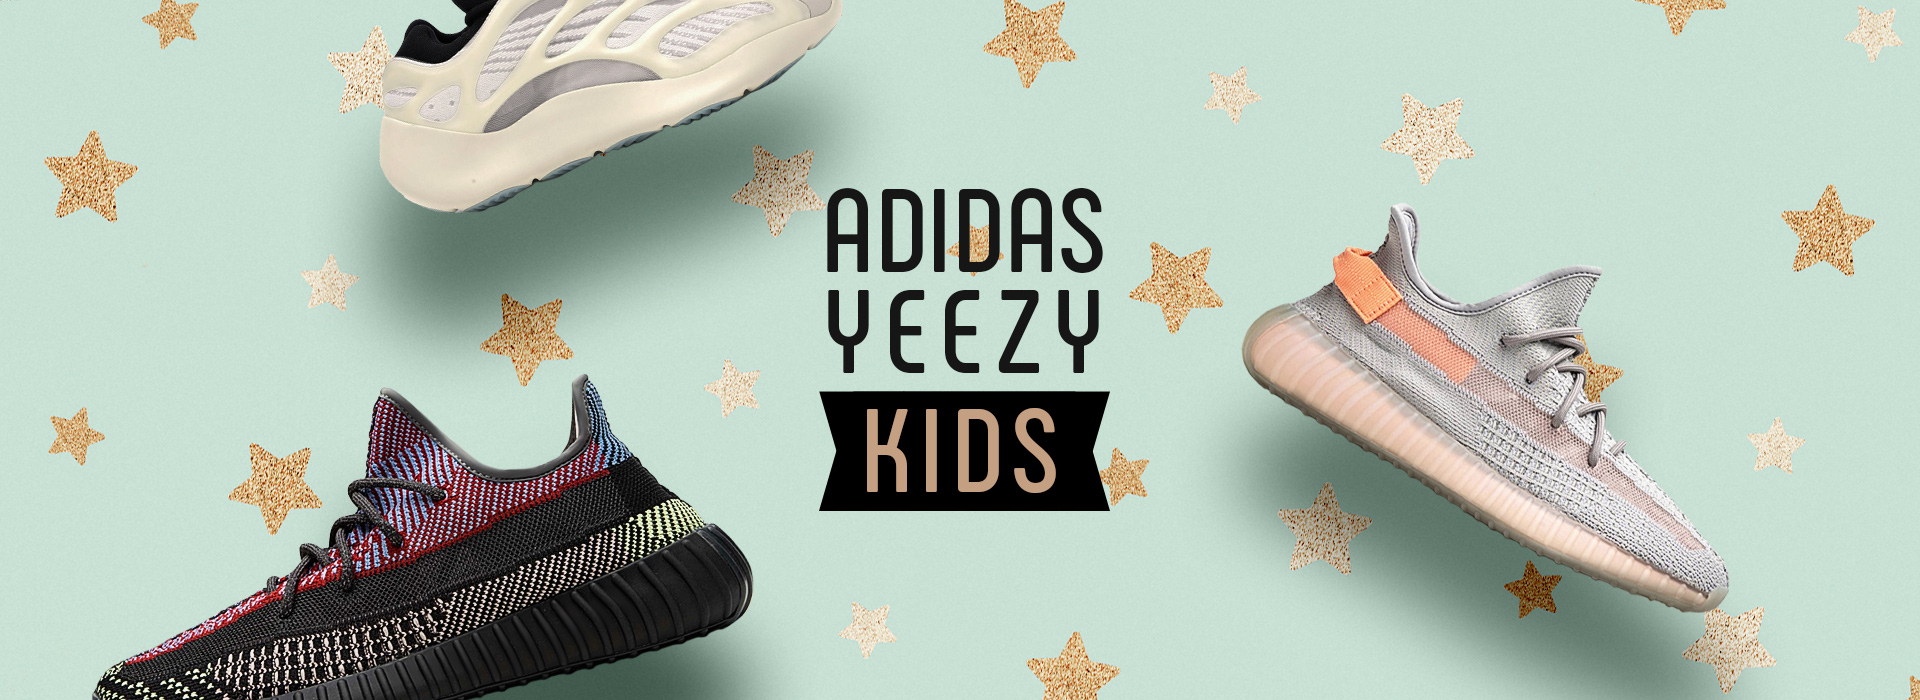 Adidas Yeezy Kids